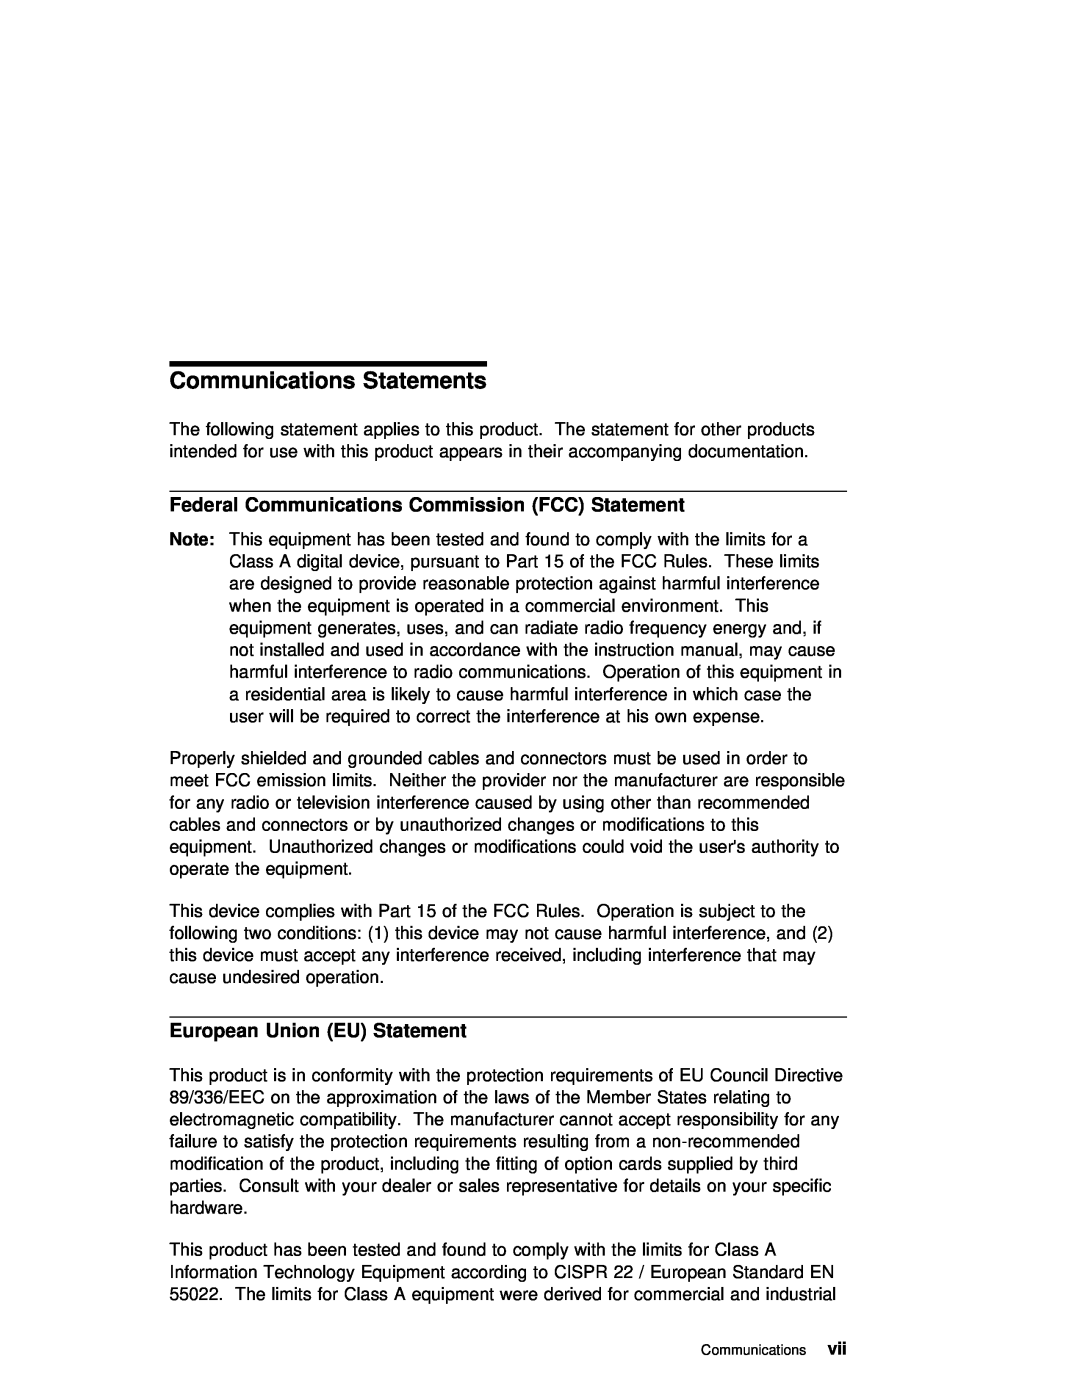 IBM B50 manual Communications Statements, Federal Communications Commission FCC Statement, European Union EU Statement 